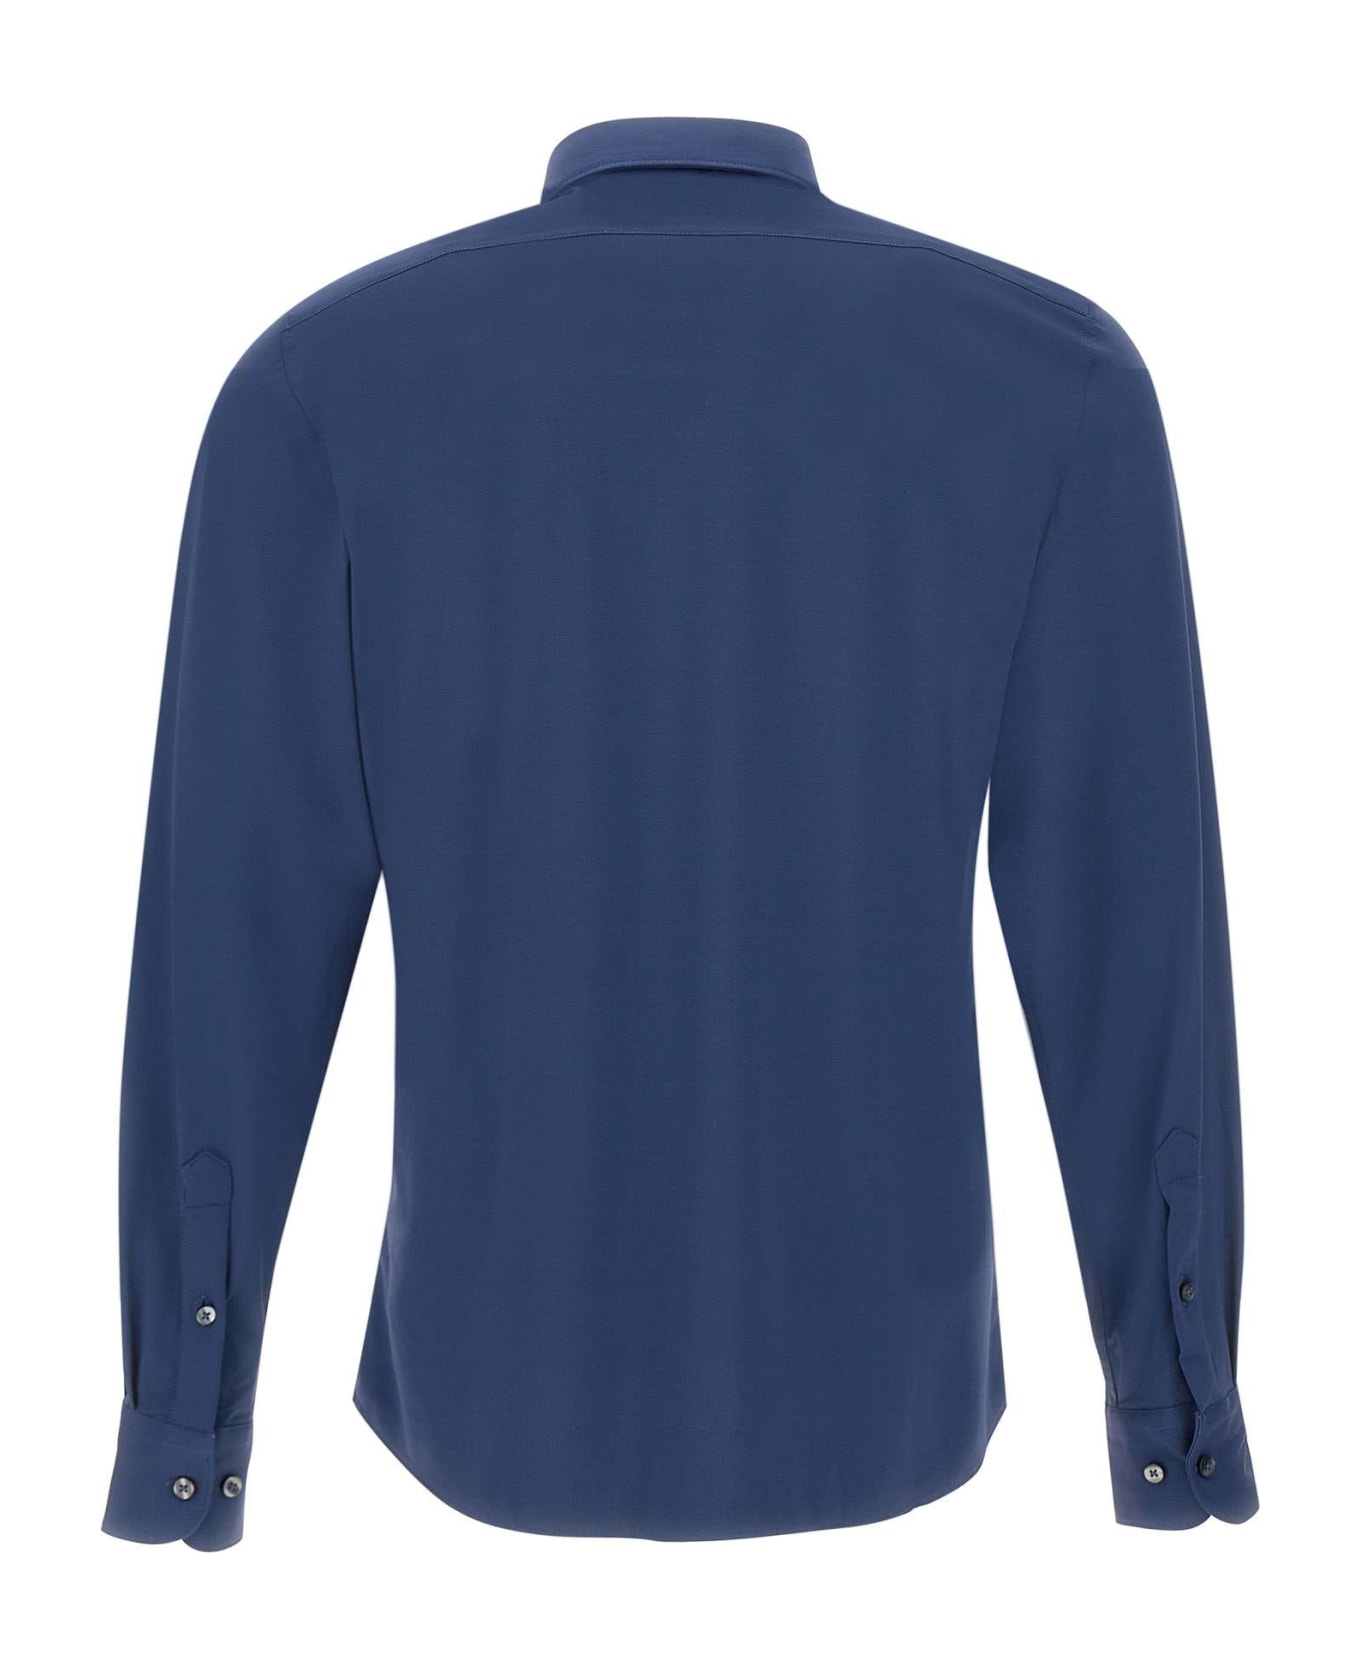 RRD - Roberto Ricci Design "oxford Open" Shirt - BLUE